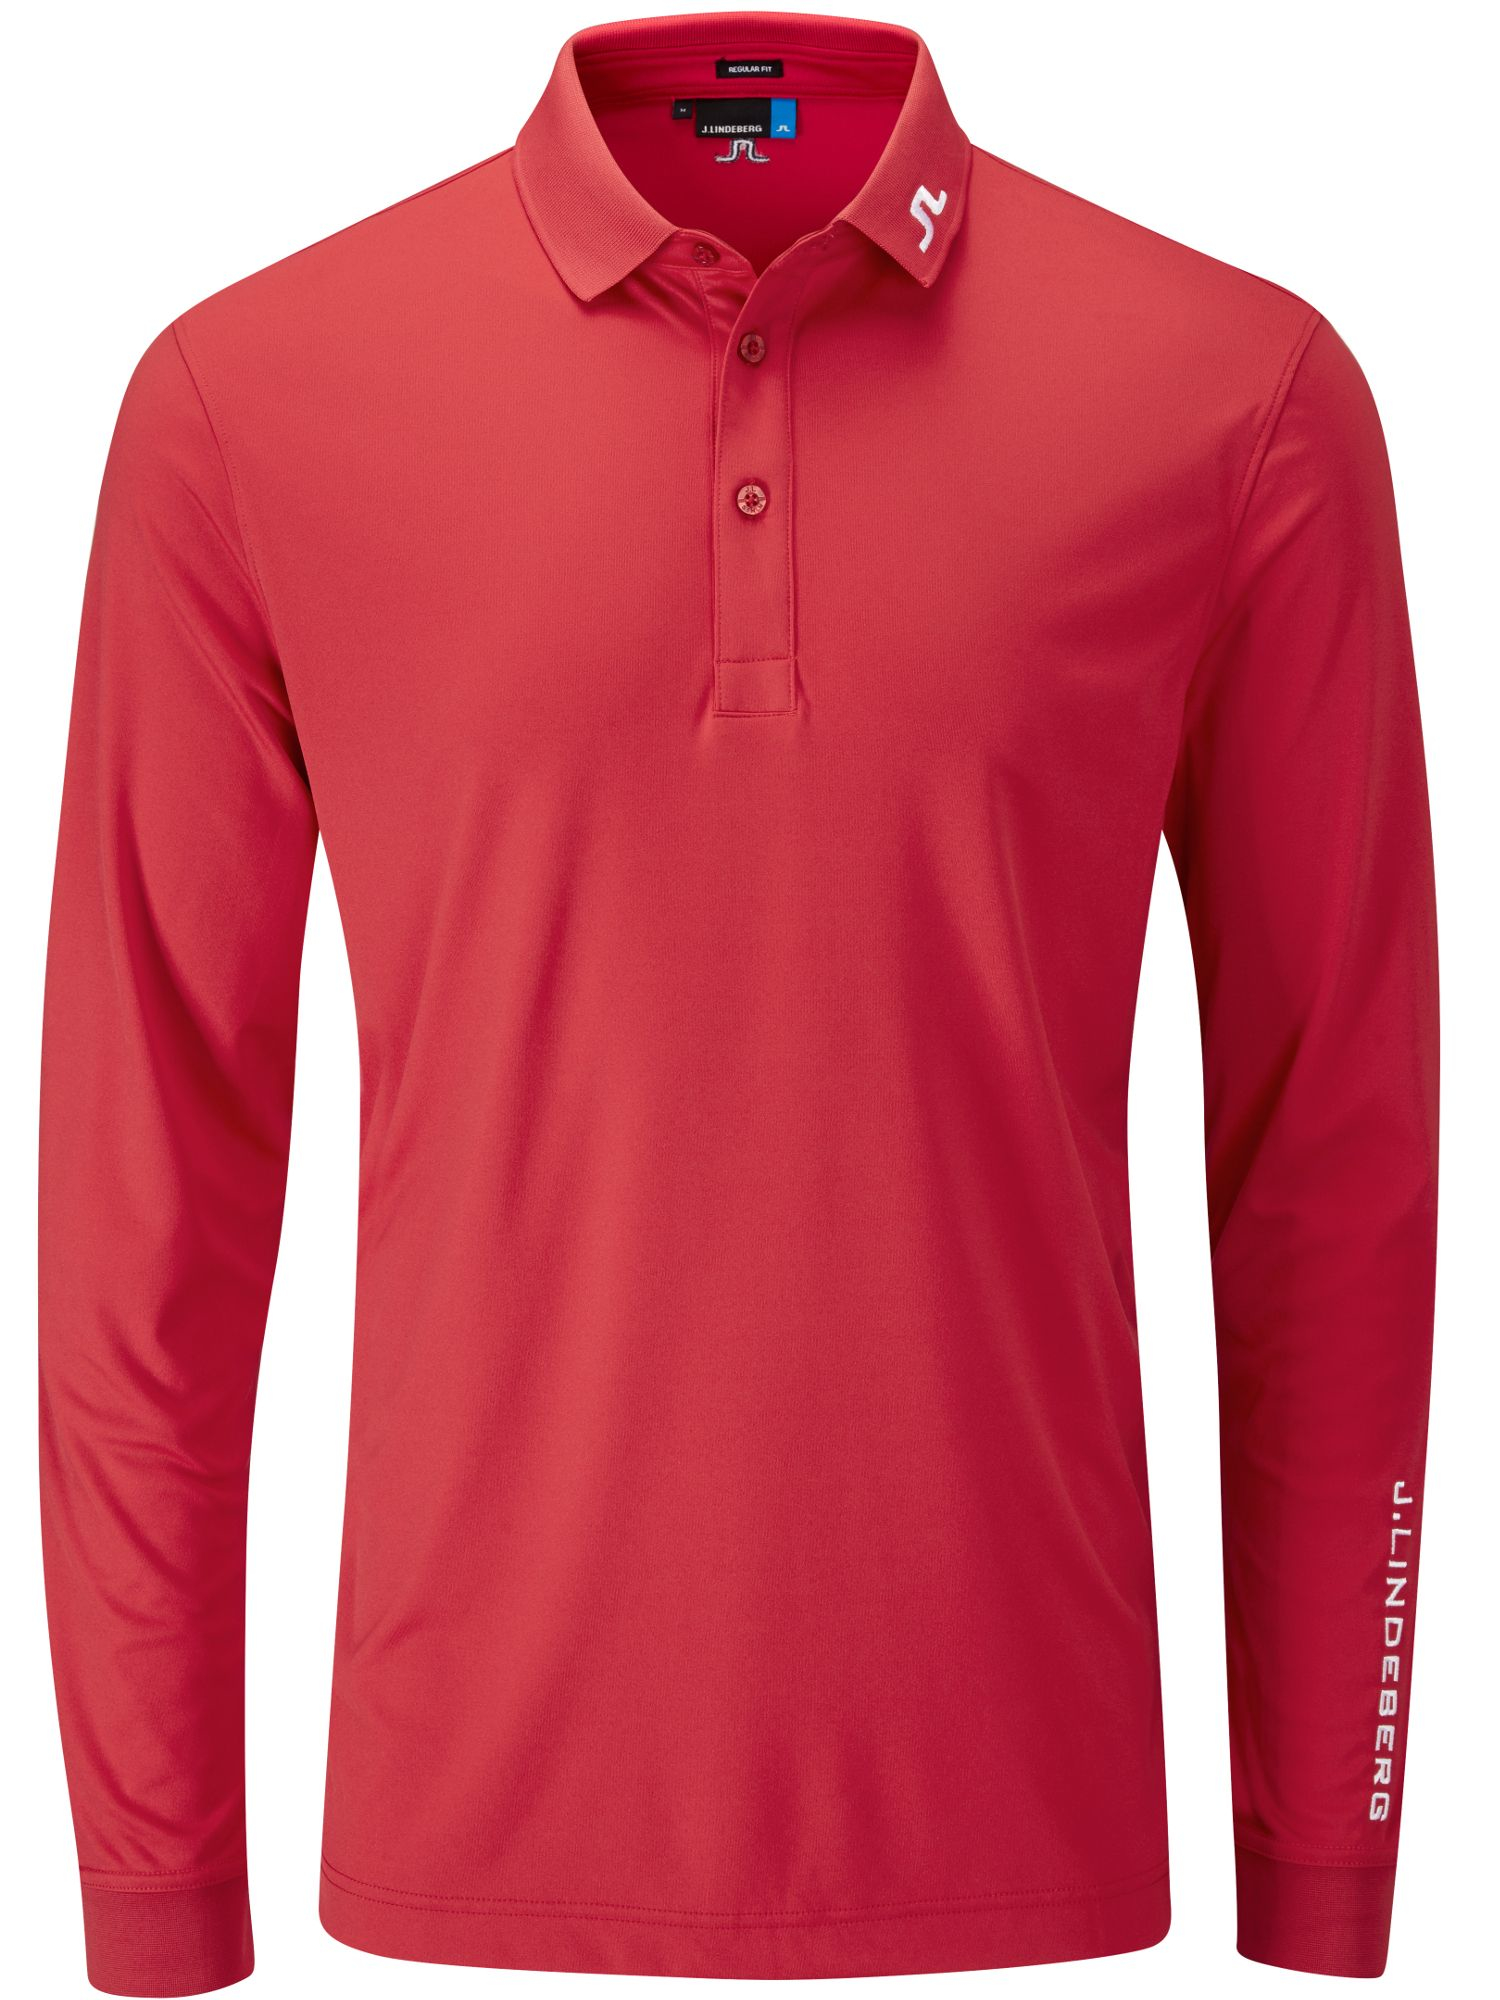 j.lindeberg golf tour tech long sleeve polo shirt